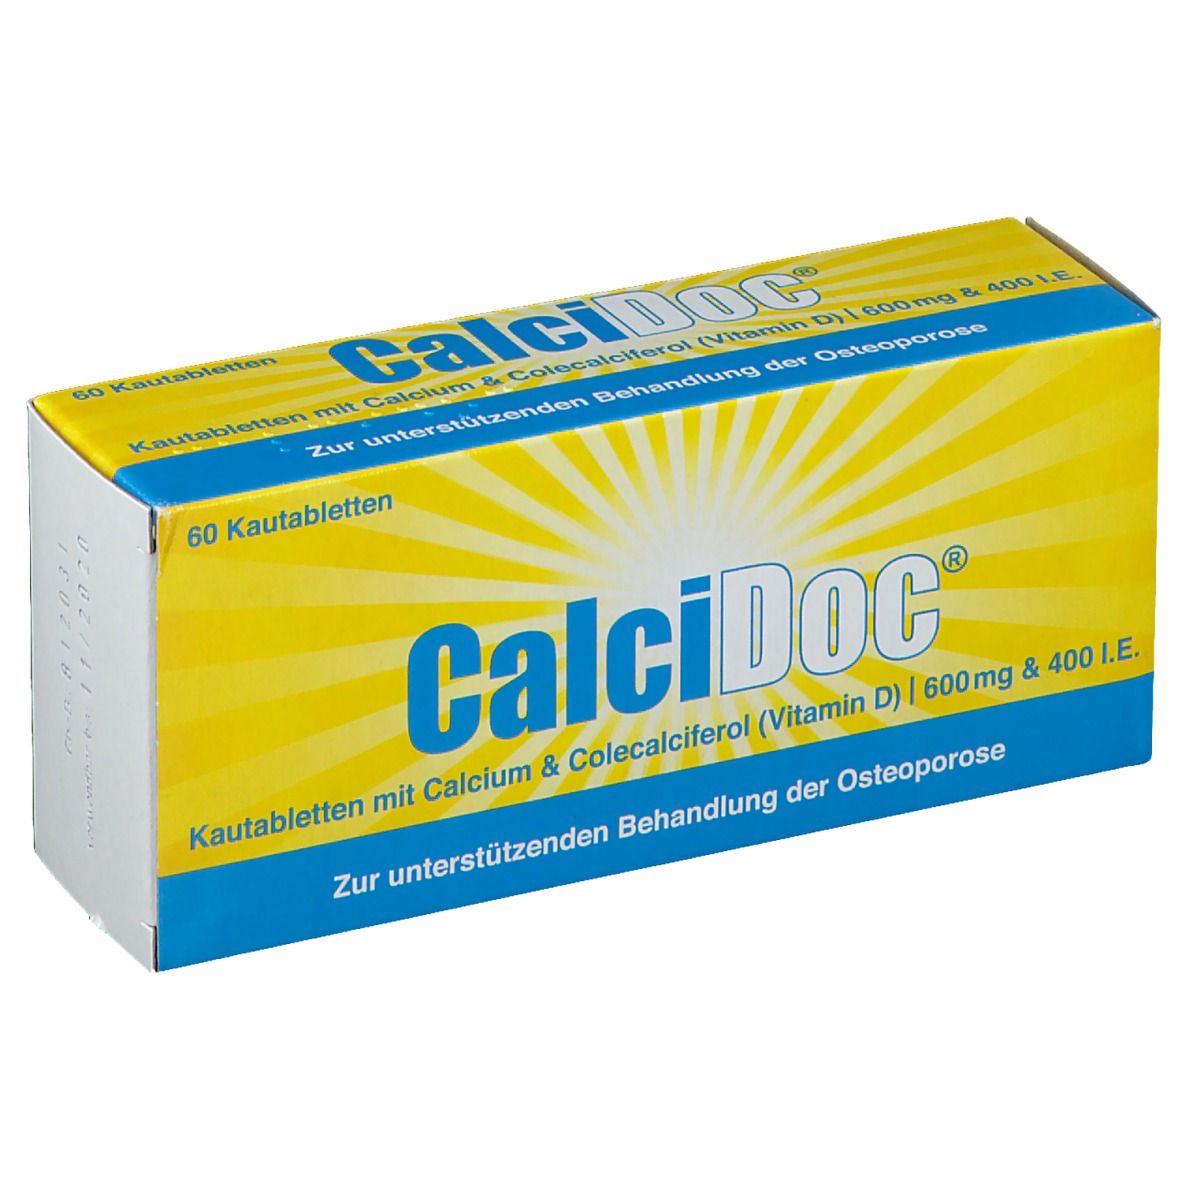 CalciDoc®